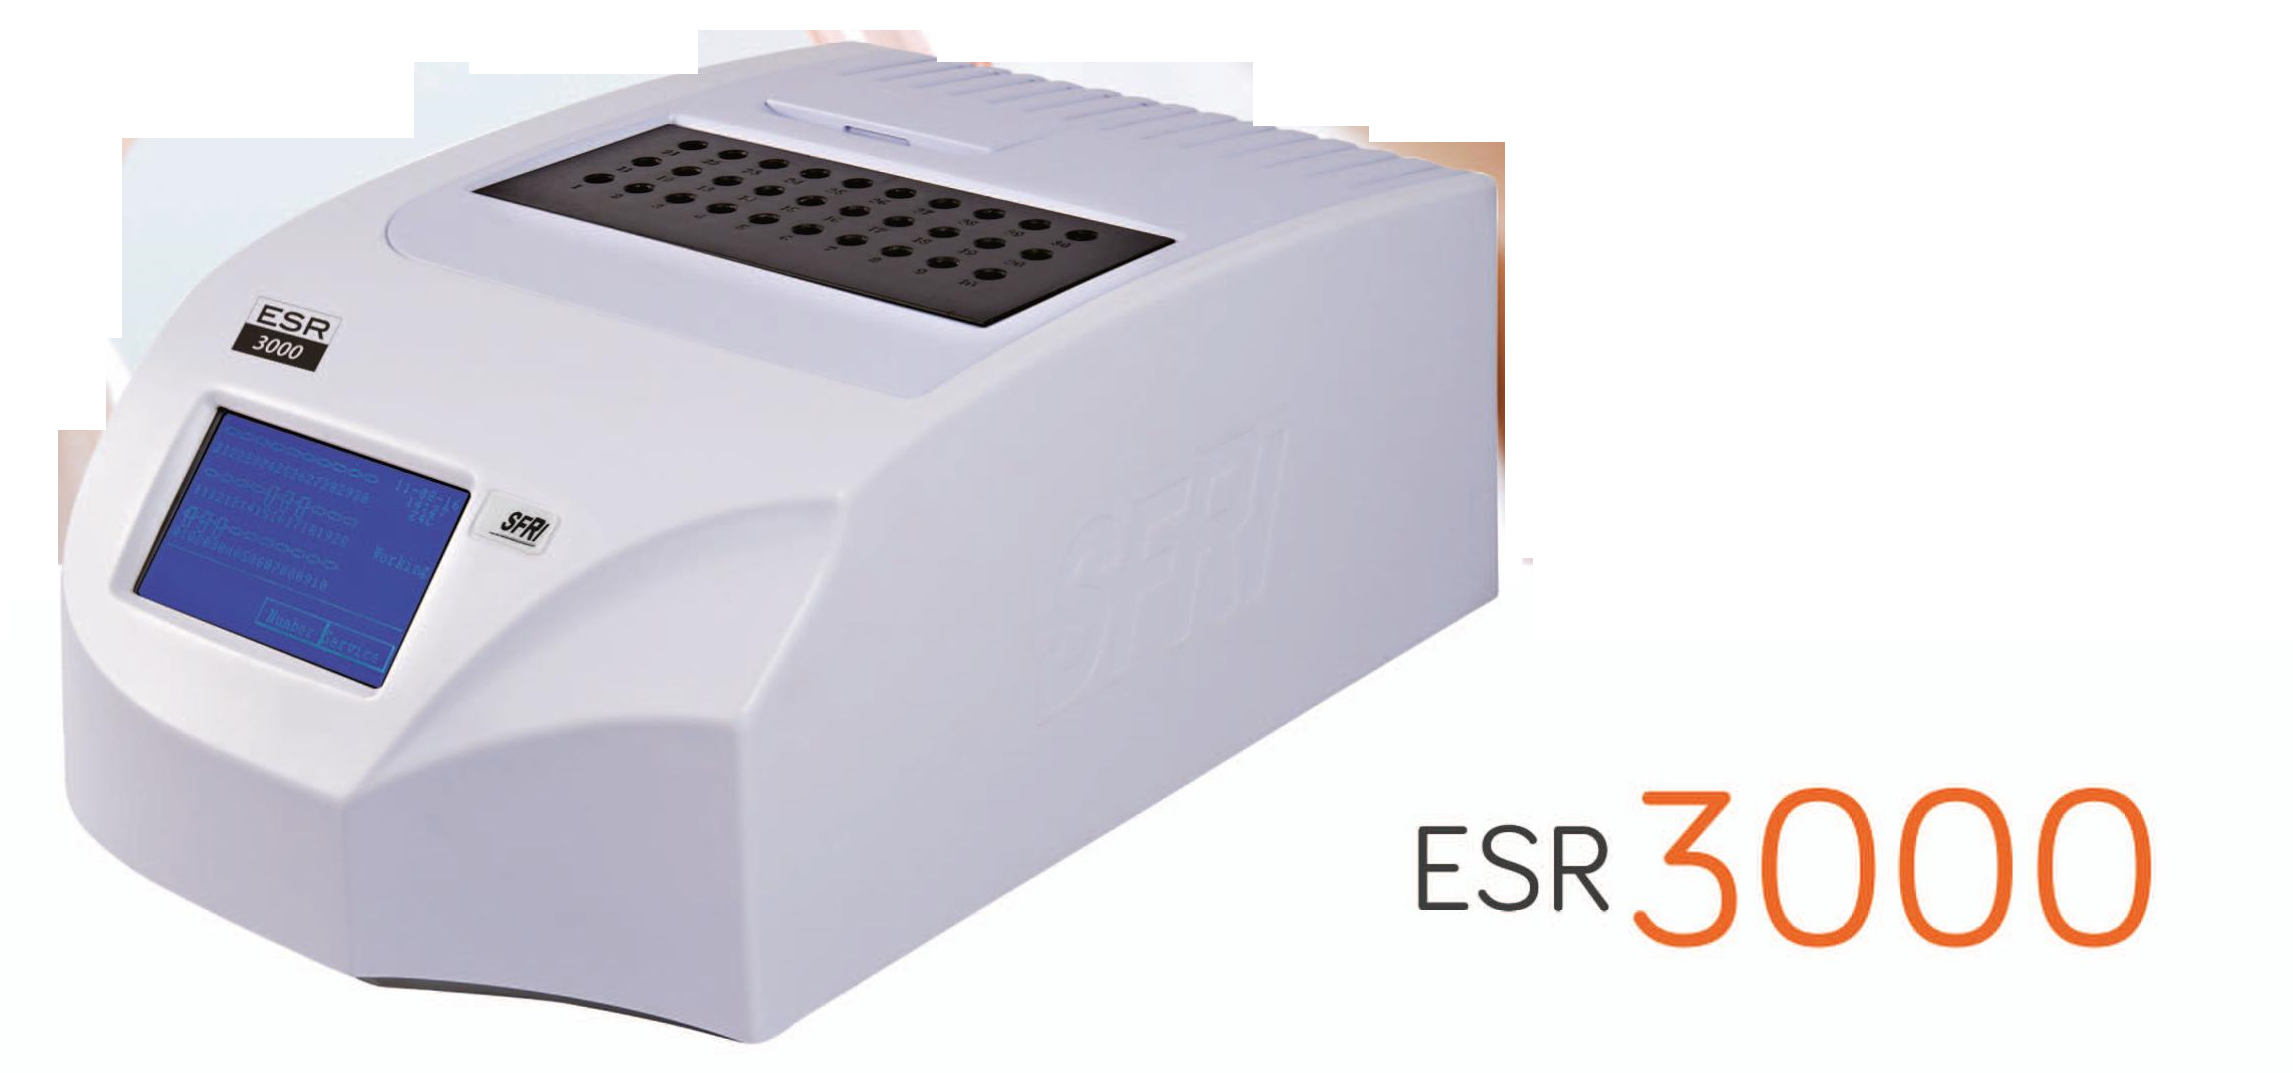 Máy đo tốc độ máu lắng Pháp - Model: ESR 3000 - Hãng: SFRI SAS